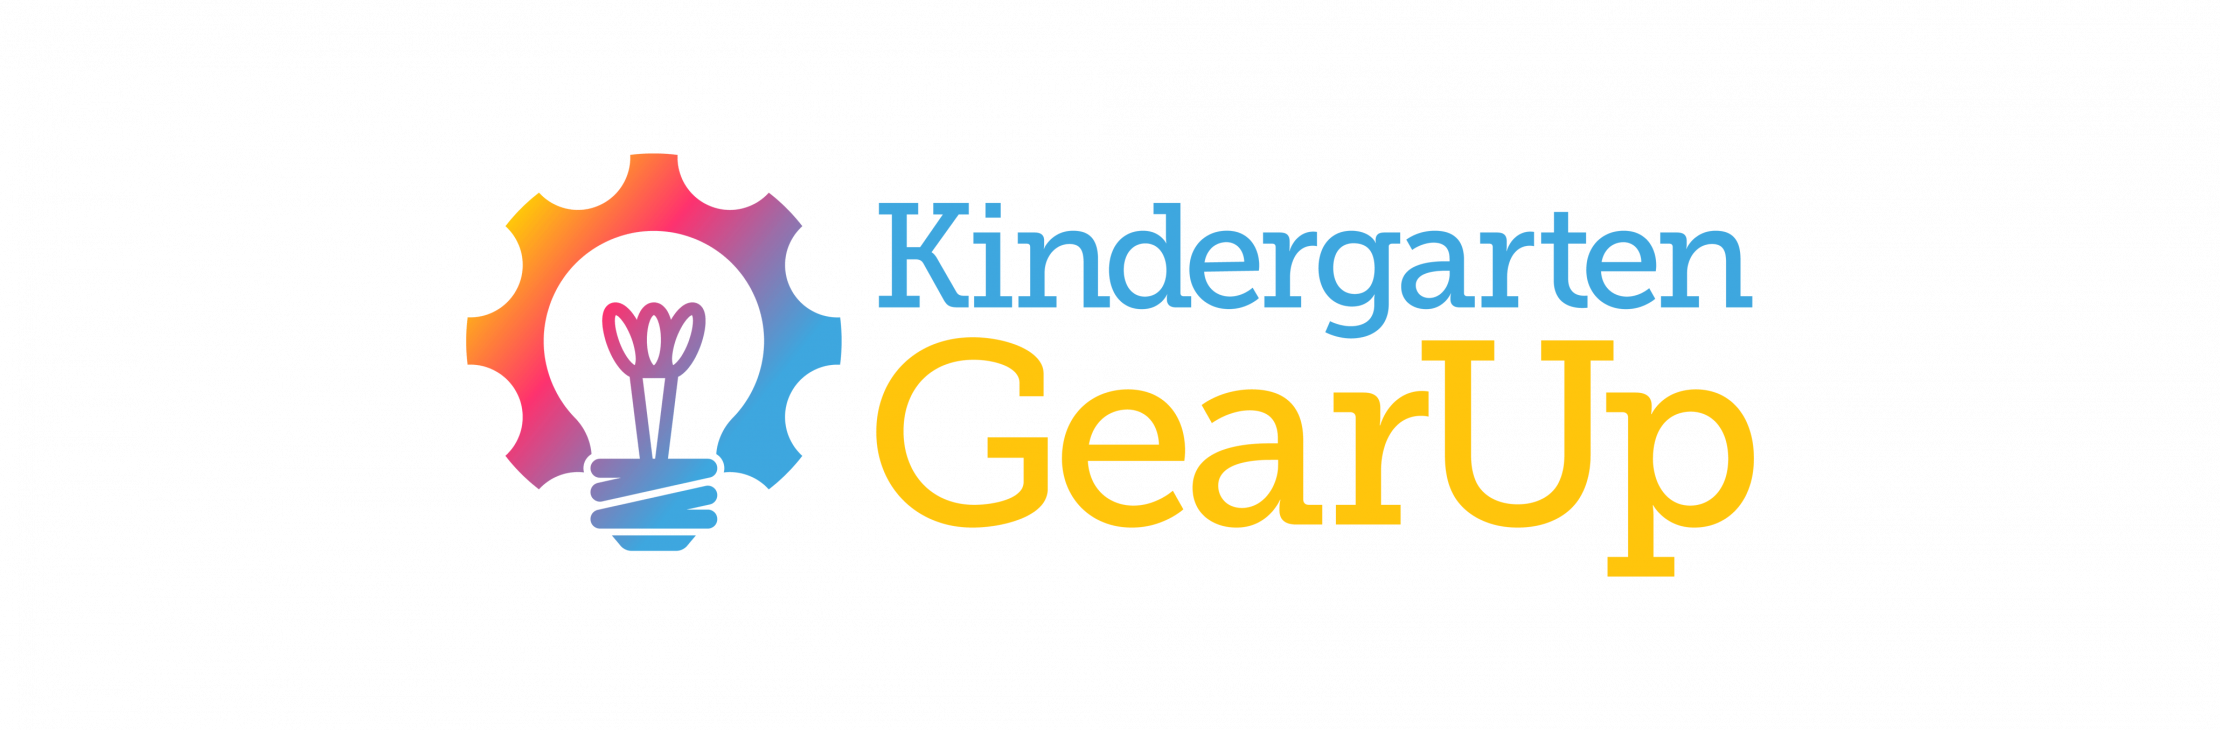 Kindergarten Gear Up logo